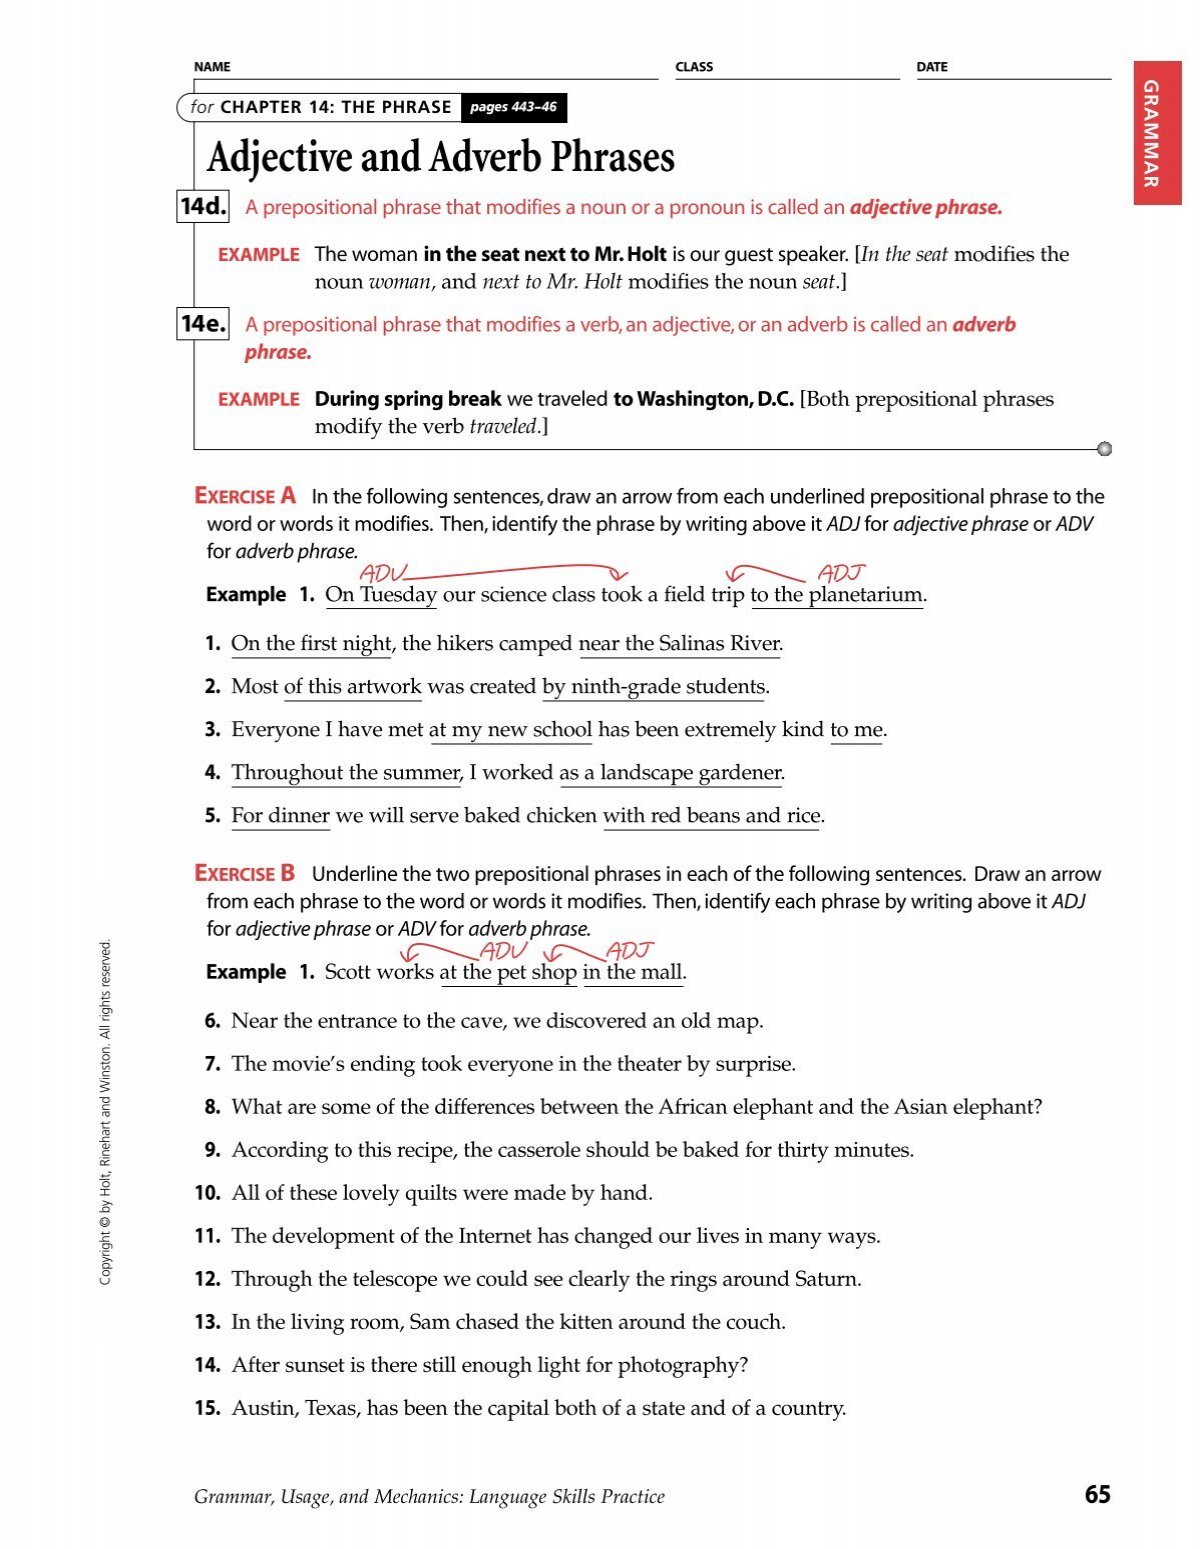 adjective-or-adverb-esl-printable-grammar-worksheets-for-kids-image-preview-in-2021-grammar